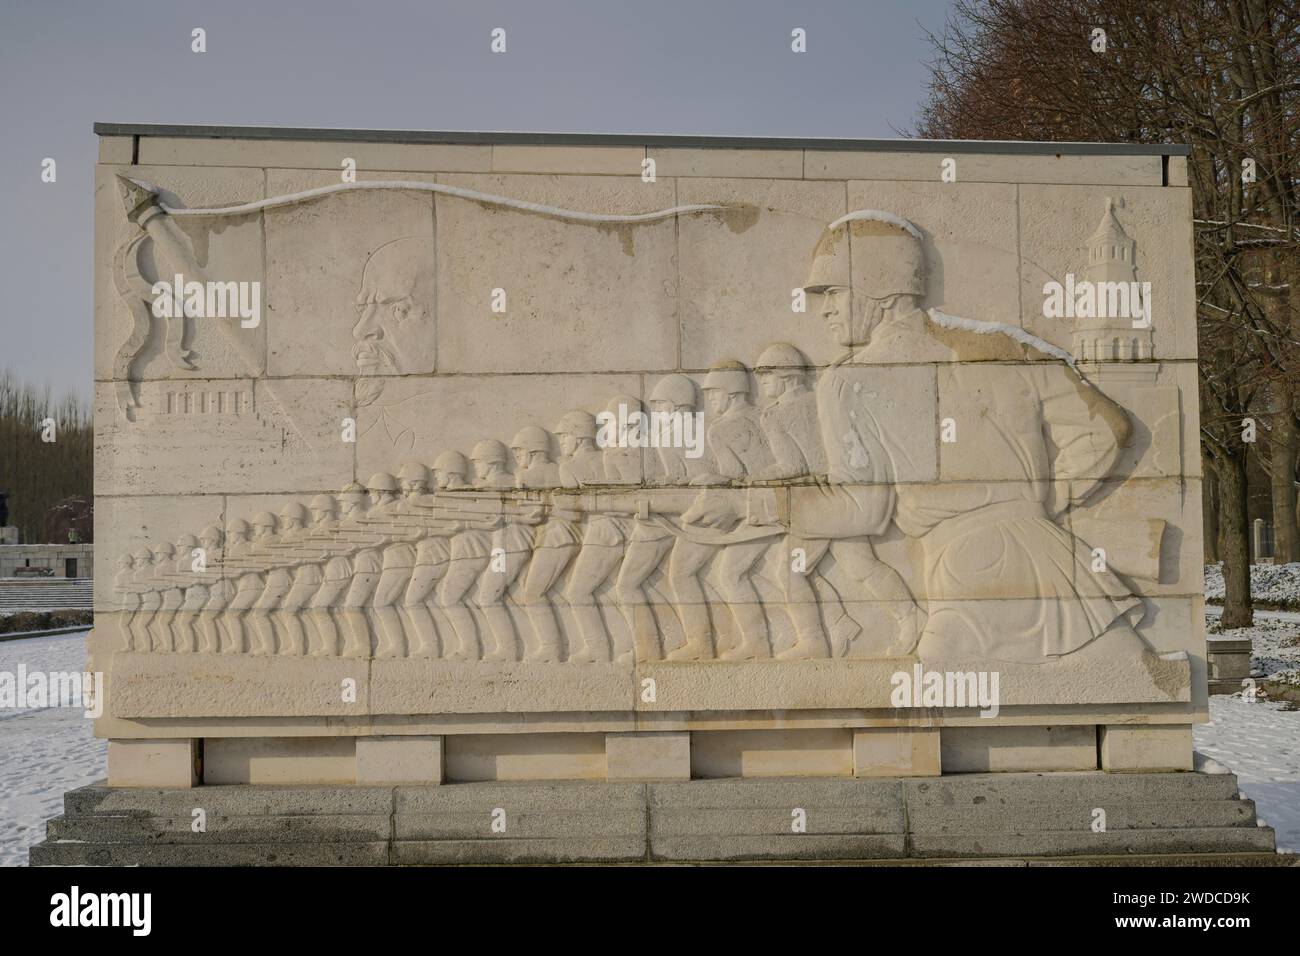 Sarkophag mit Steinrelief, heldenhafte Armee, sowjetisches Denkmal, Winter, Treptower Park, Treptow, Treptow-Koepenick, Berlin, Deutschland Stockfoto